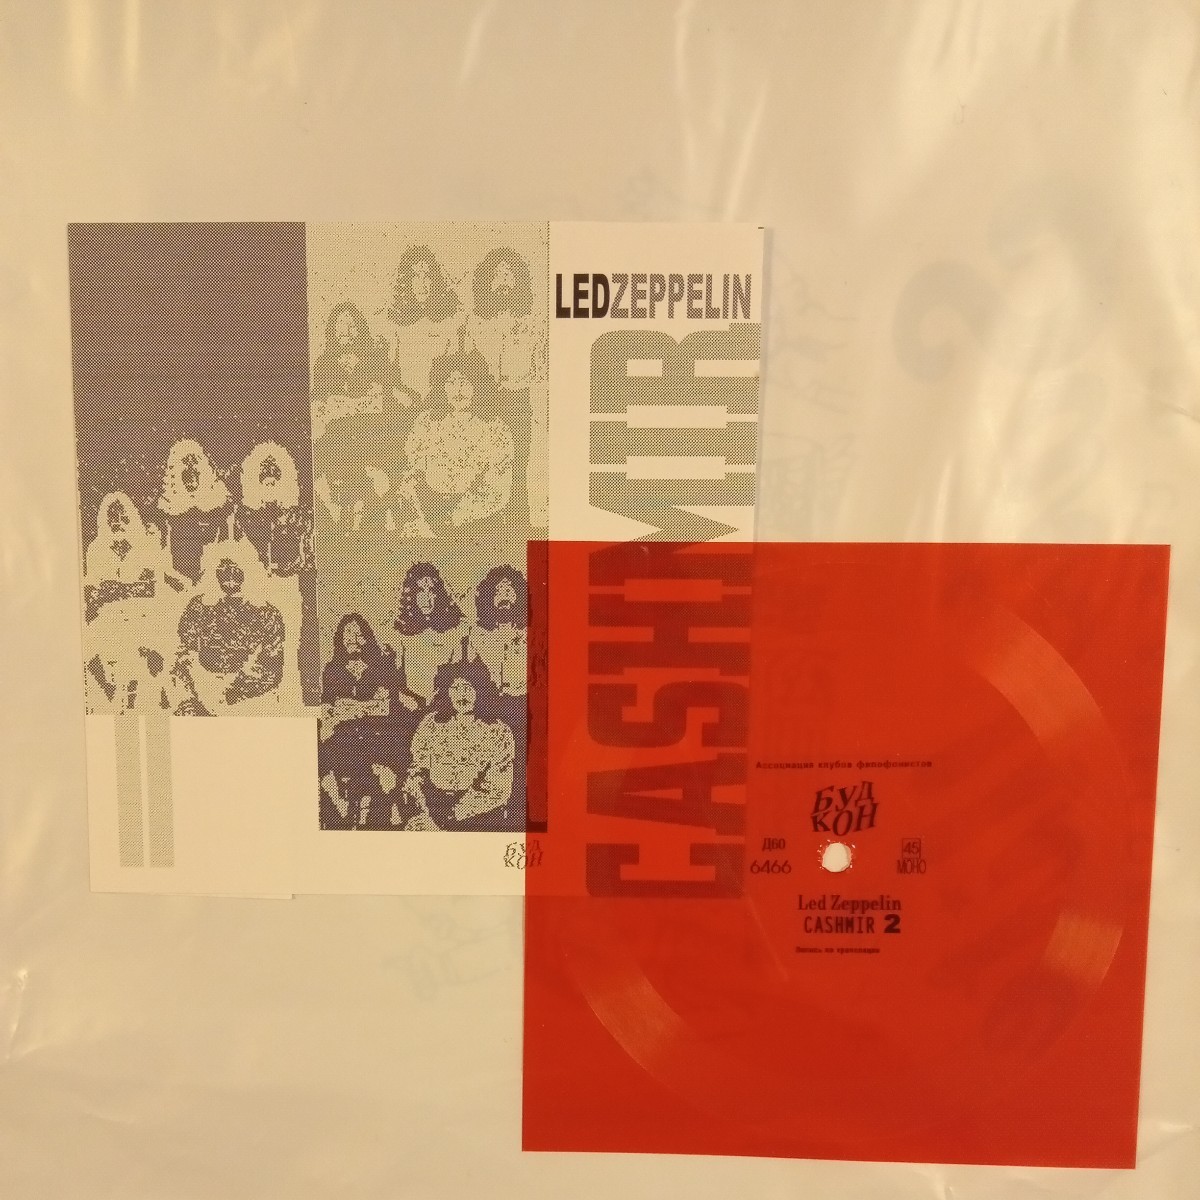 led zeppelin cashmir レッド・ツェッペリン 7inch flex sheet ソノシート vinyl レコード アナログ lp record シングル _画像1